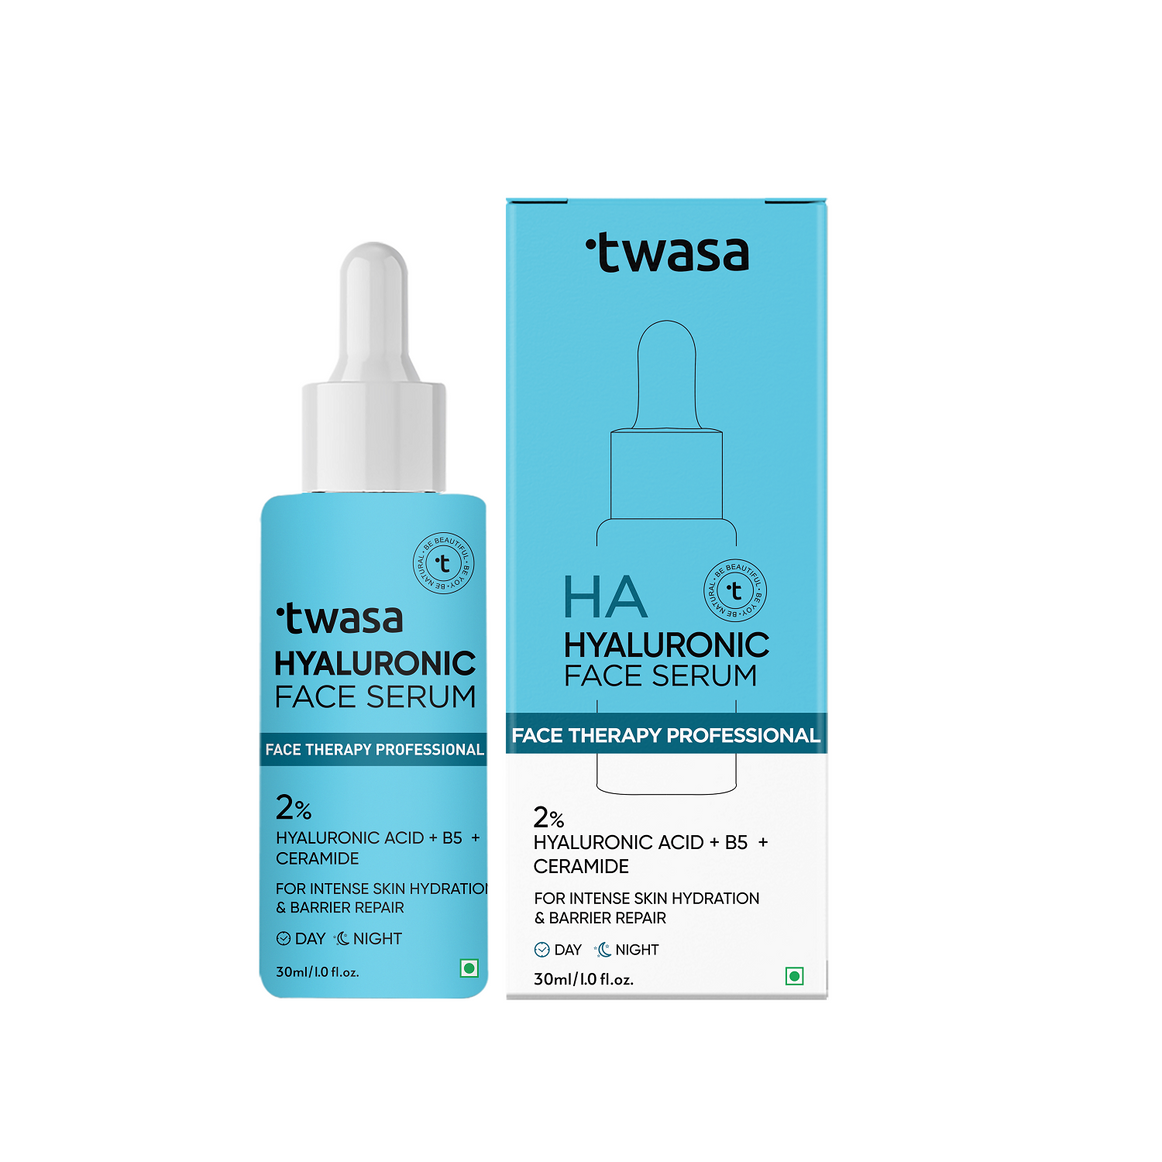 Twasa 2% Hyaluronic Acid Serum 30ml - Best Hyaluronic Acid Serum for Face, Skin Moisture, and Radiance - Top-rated Vitamin C and Hyaluronic Acid Serum